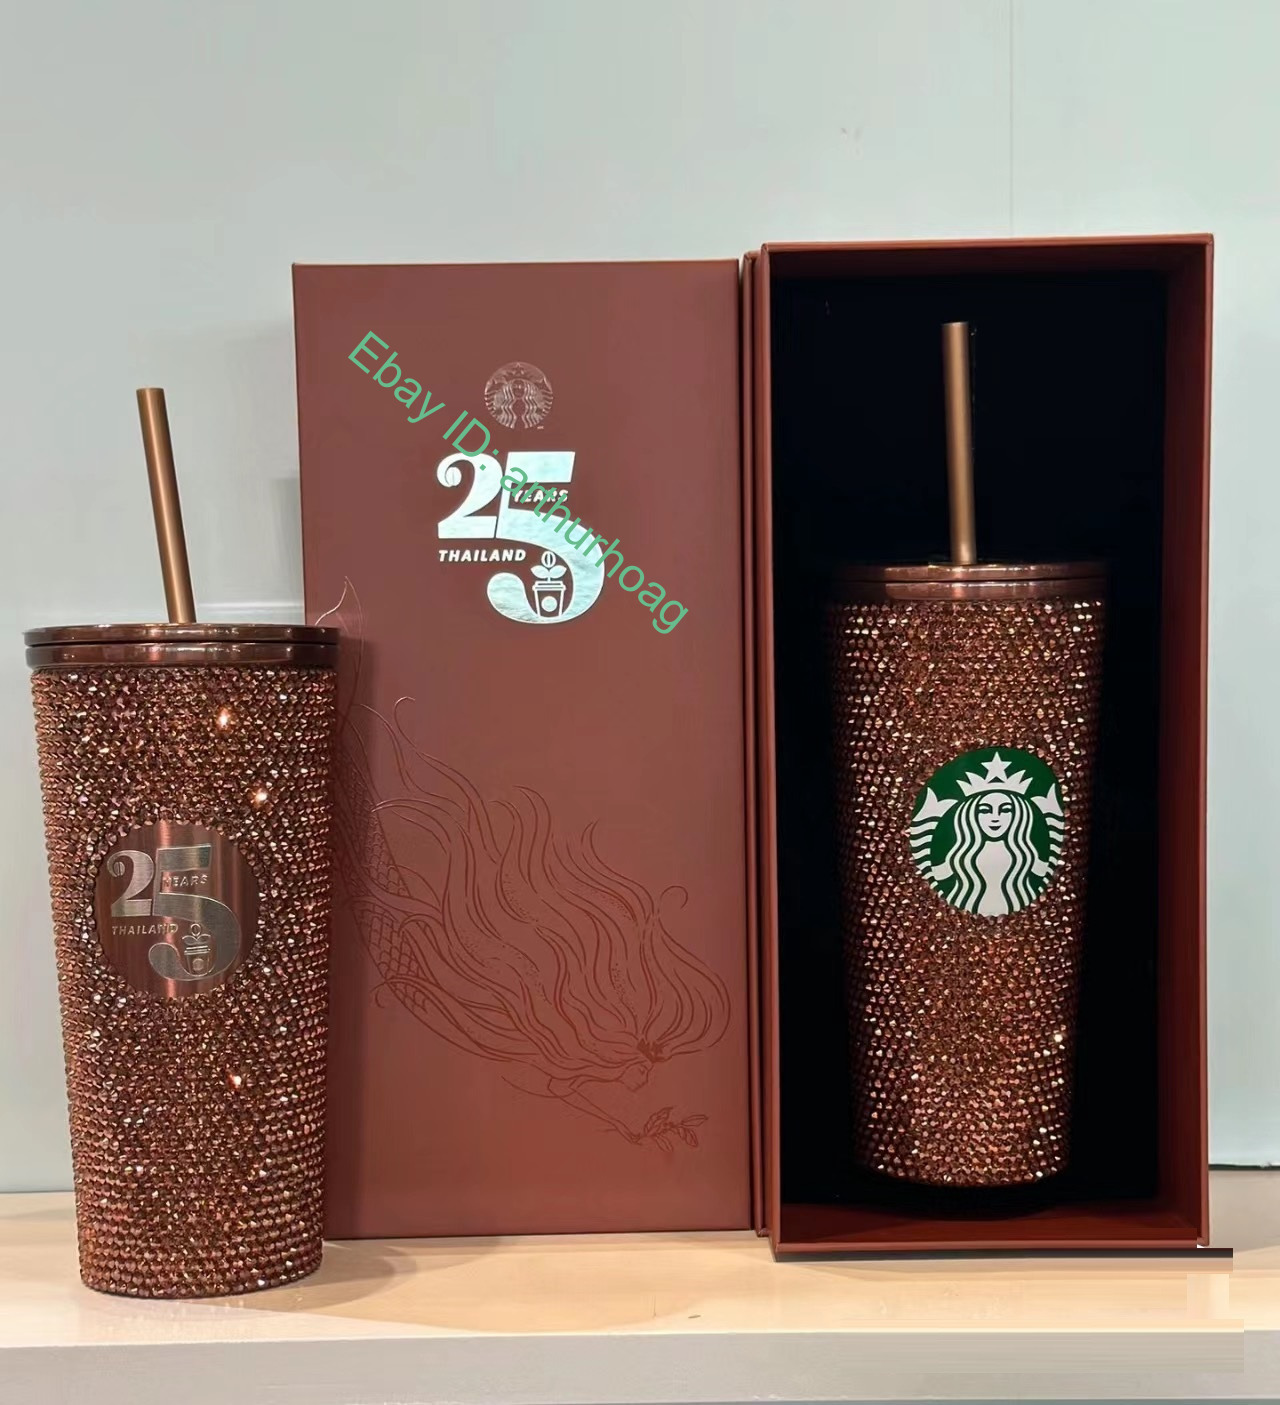 Starbucks Thailand Copper Crystal Rhinestone 25th Anniversary Tumbler 16oz Cup